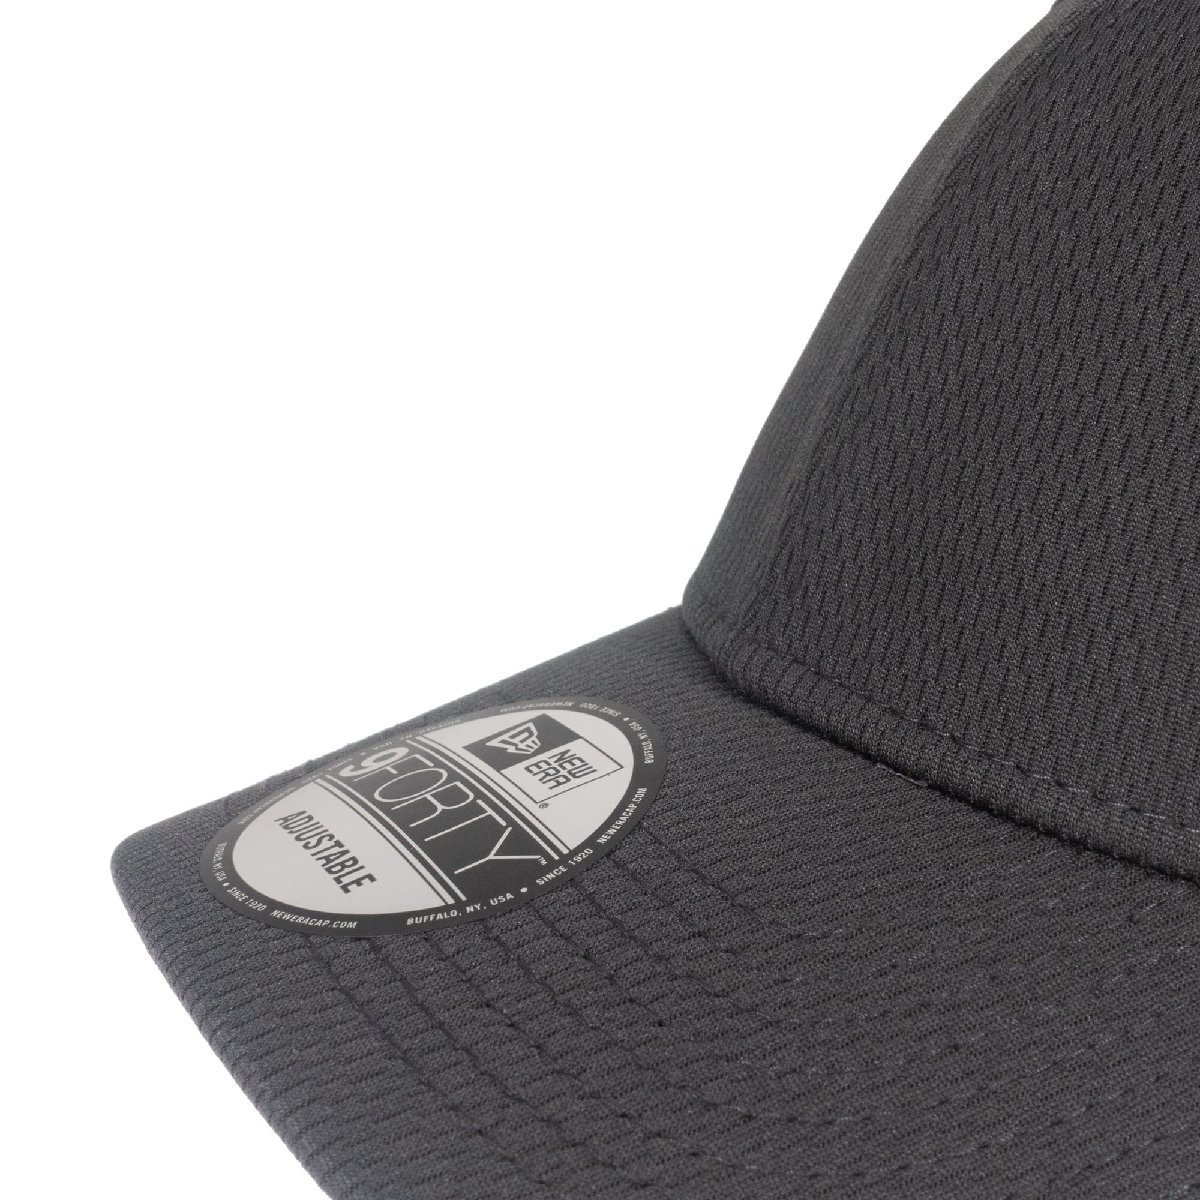 NE209-NEW ERA New Era - Performance dash adjustable cap graphite plain men's 